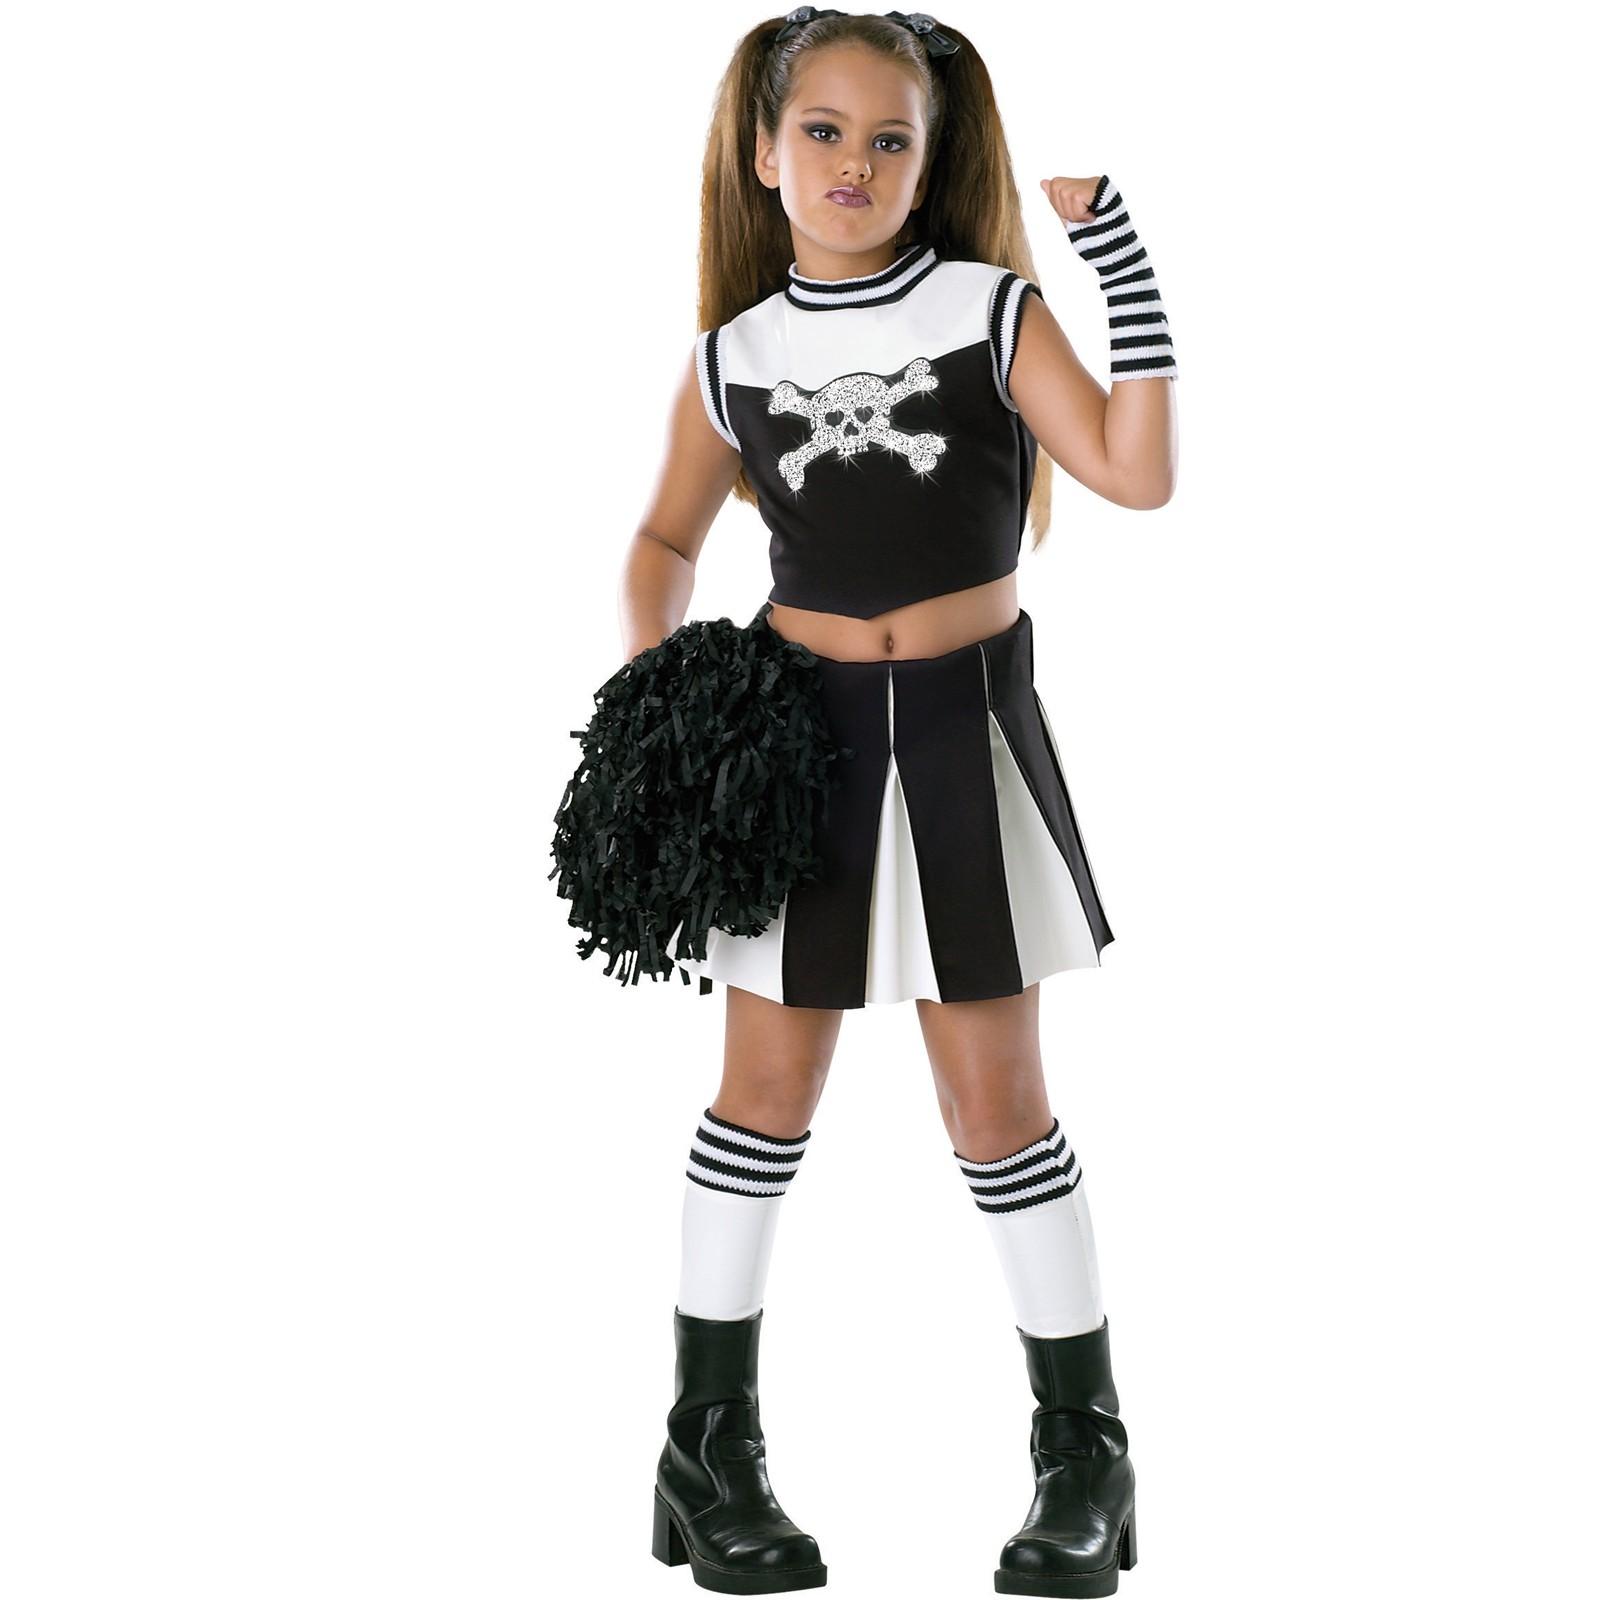 Spooktacular Creations Cheerless Costume for Girls Scary Spiritless Cheerleader Costume